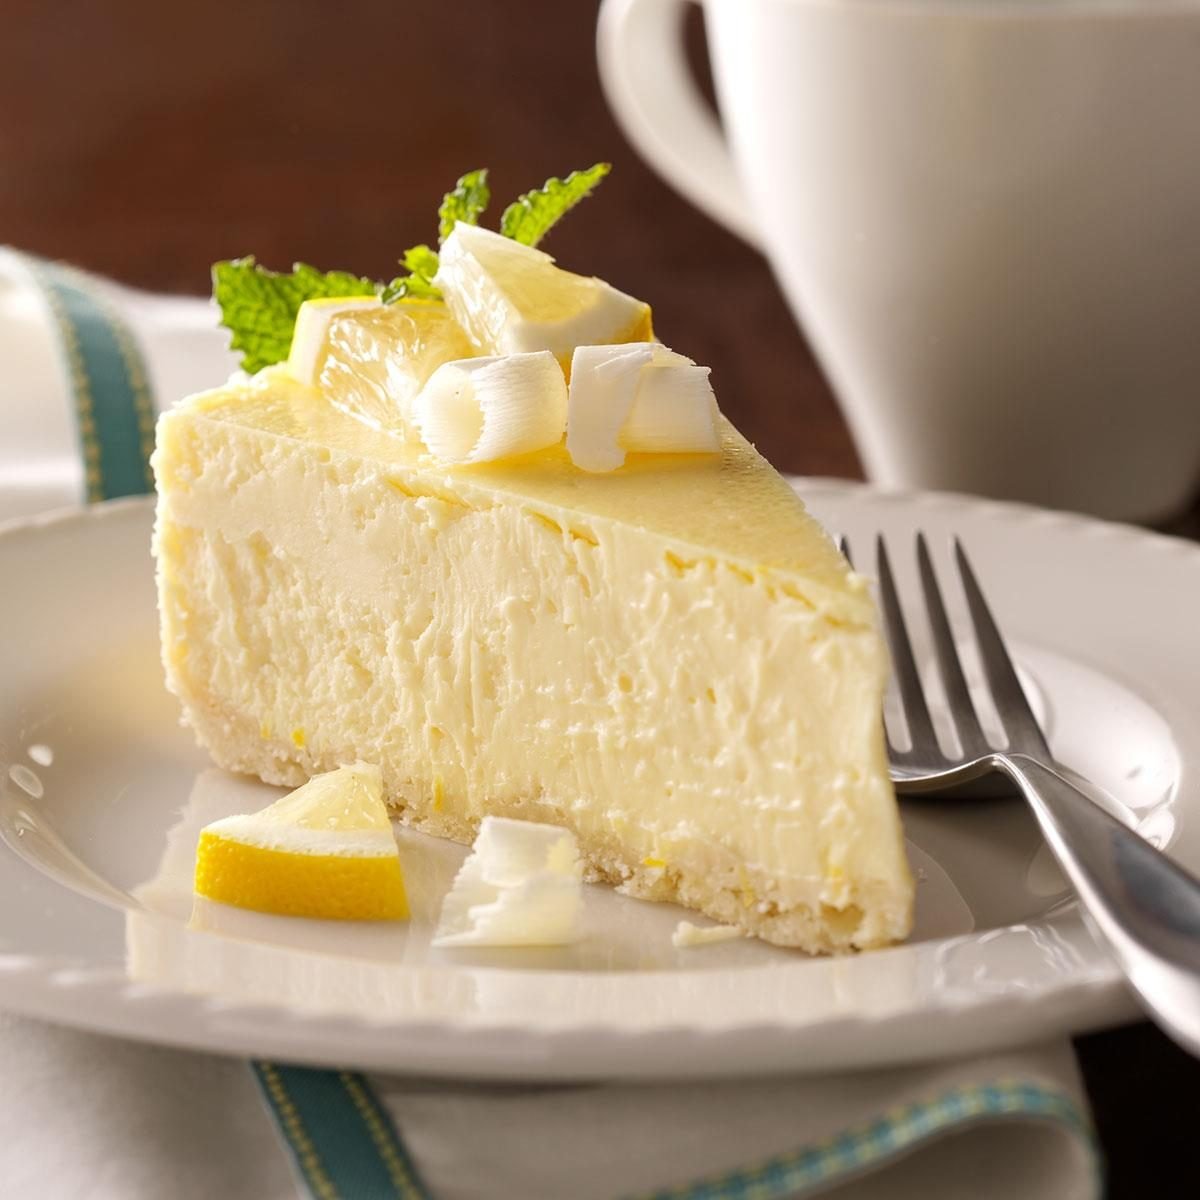 Discover white chocolate cheesecake